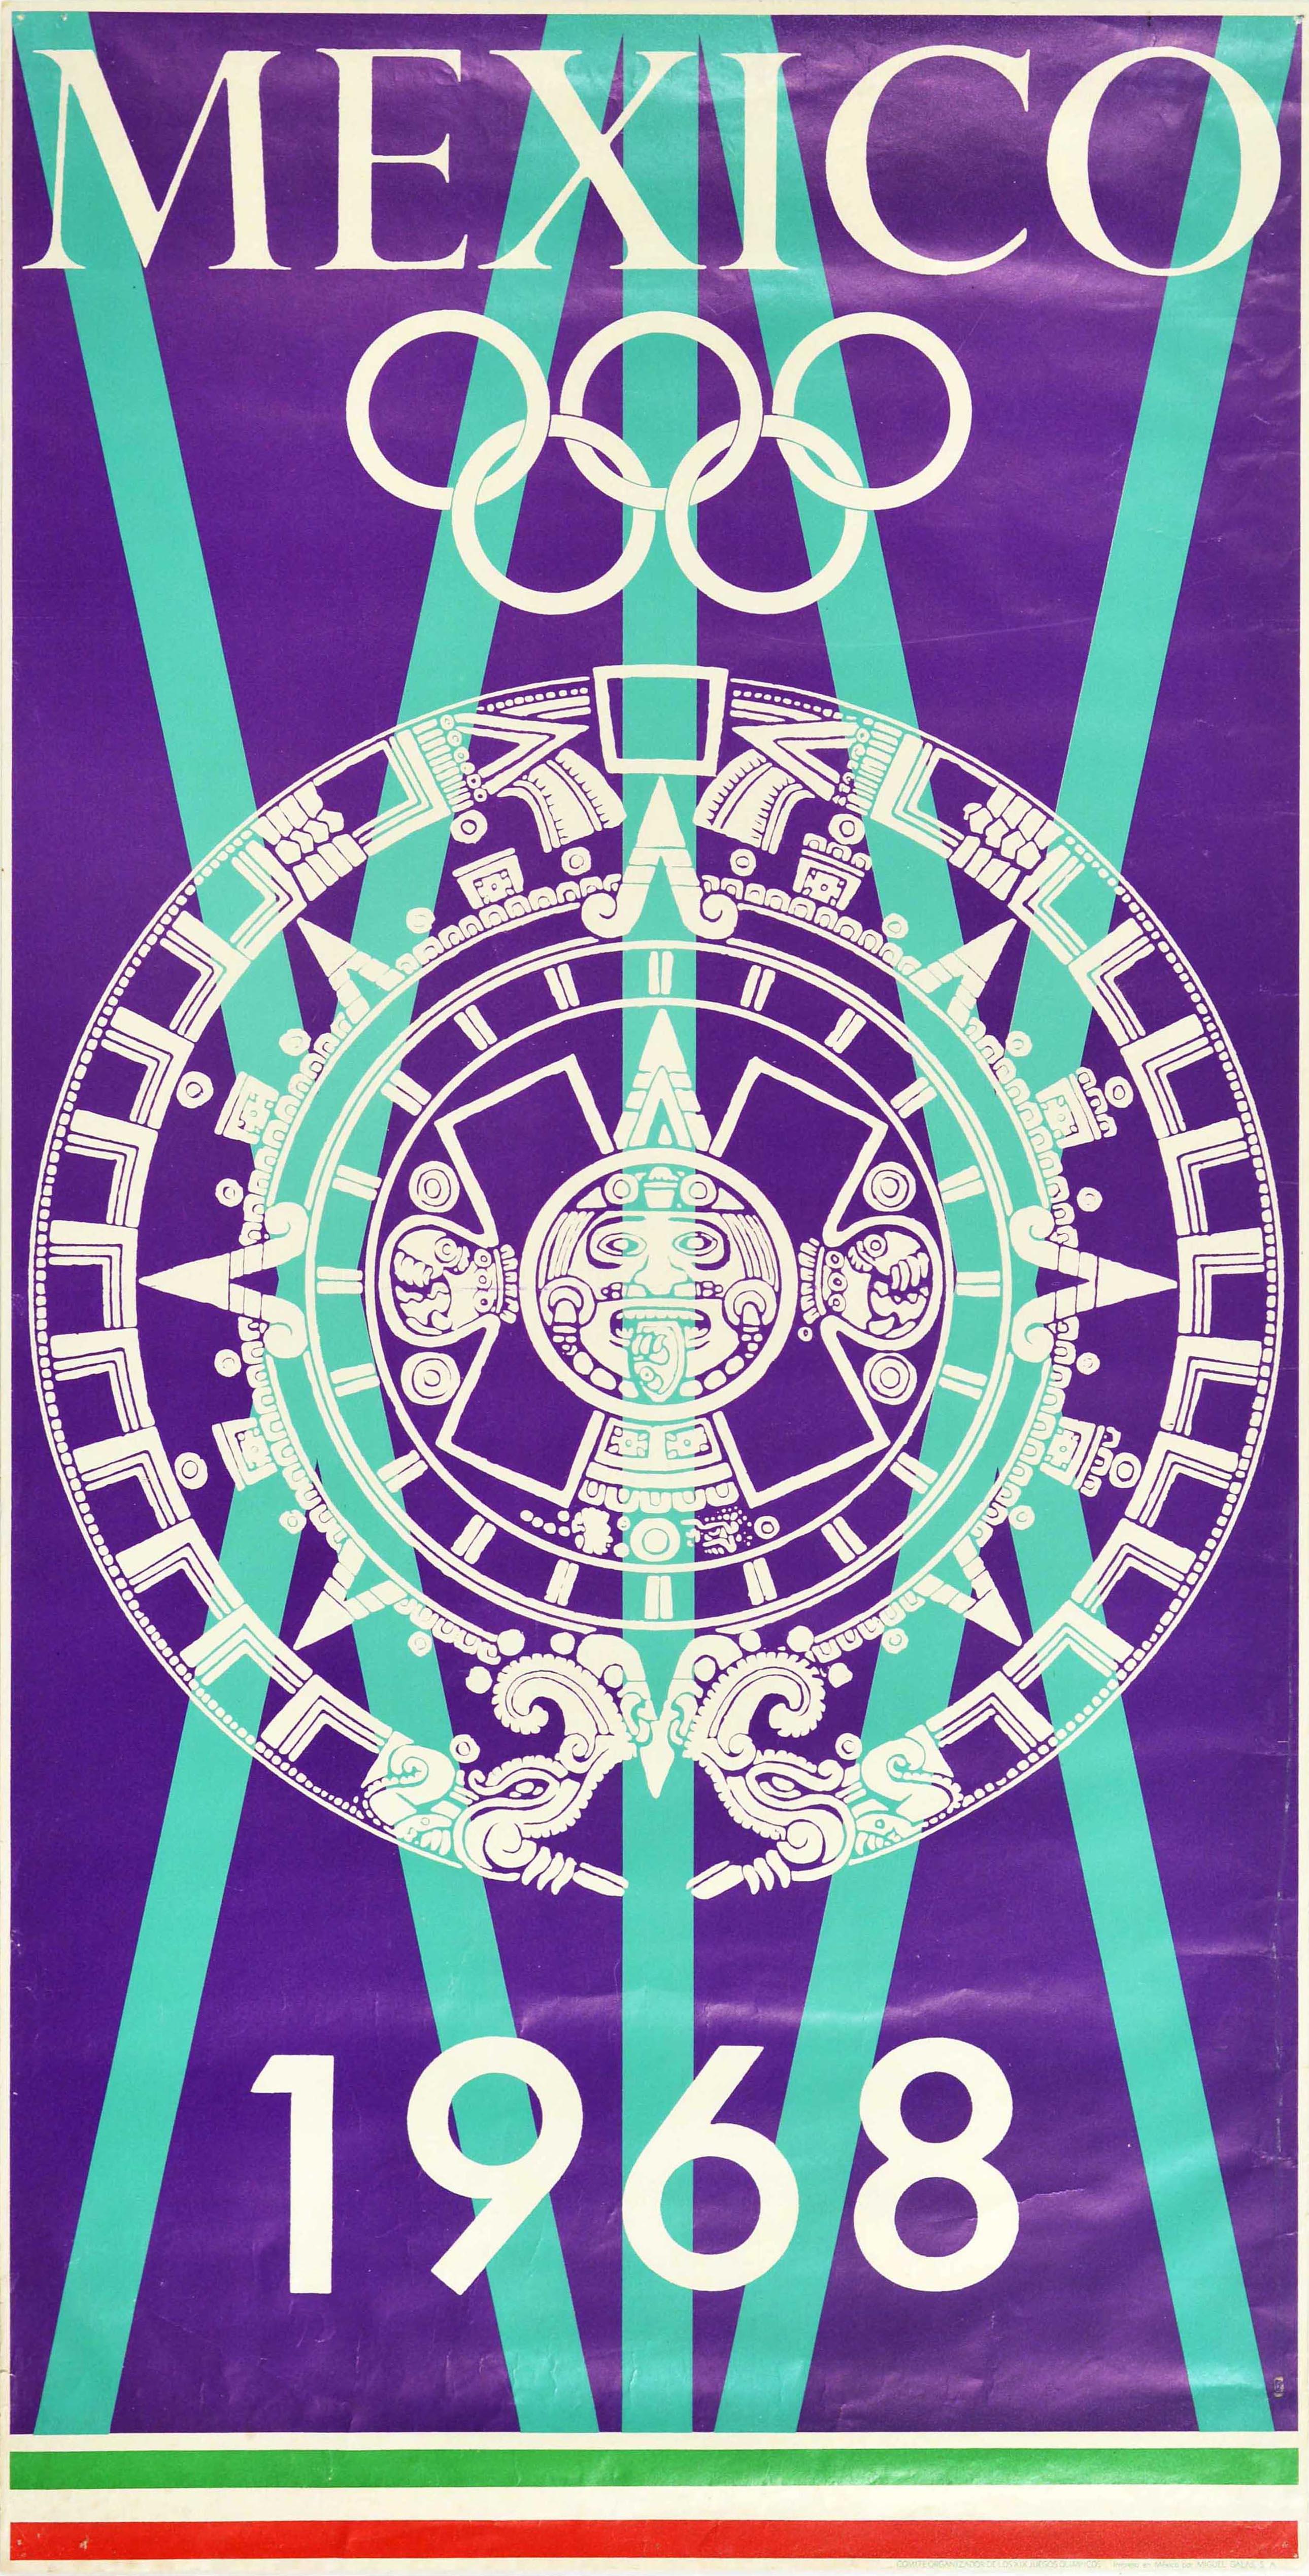 Unknown Print - Original Vintage Sports Poster Mexico Olympic Games 1968 Aztec Sun Sculpture Art